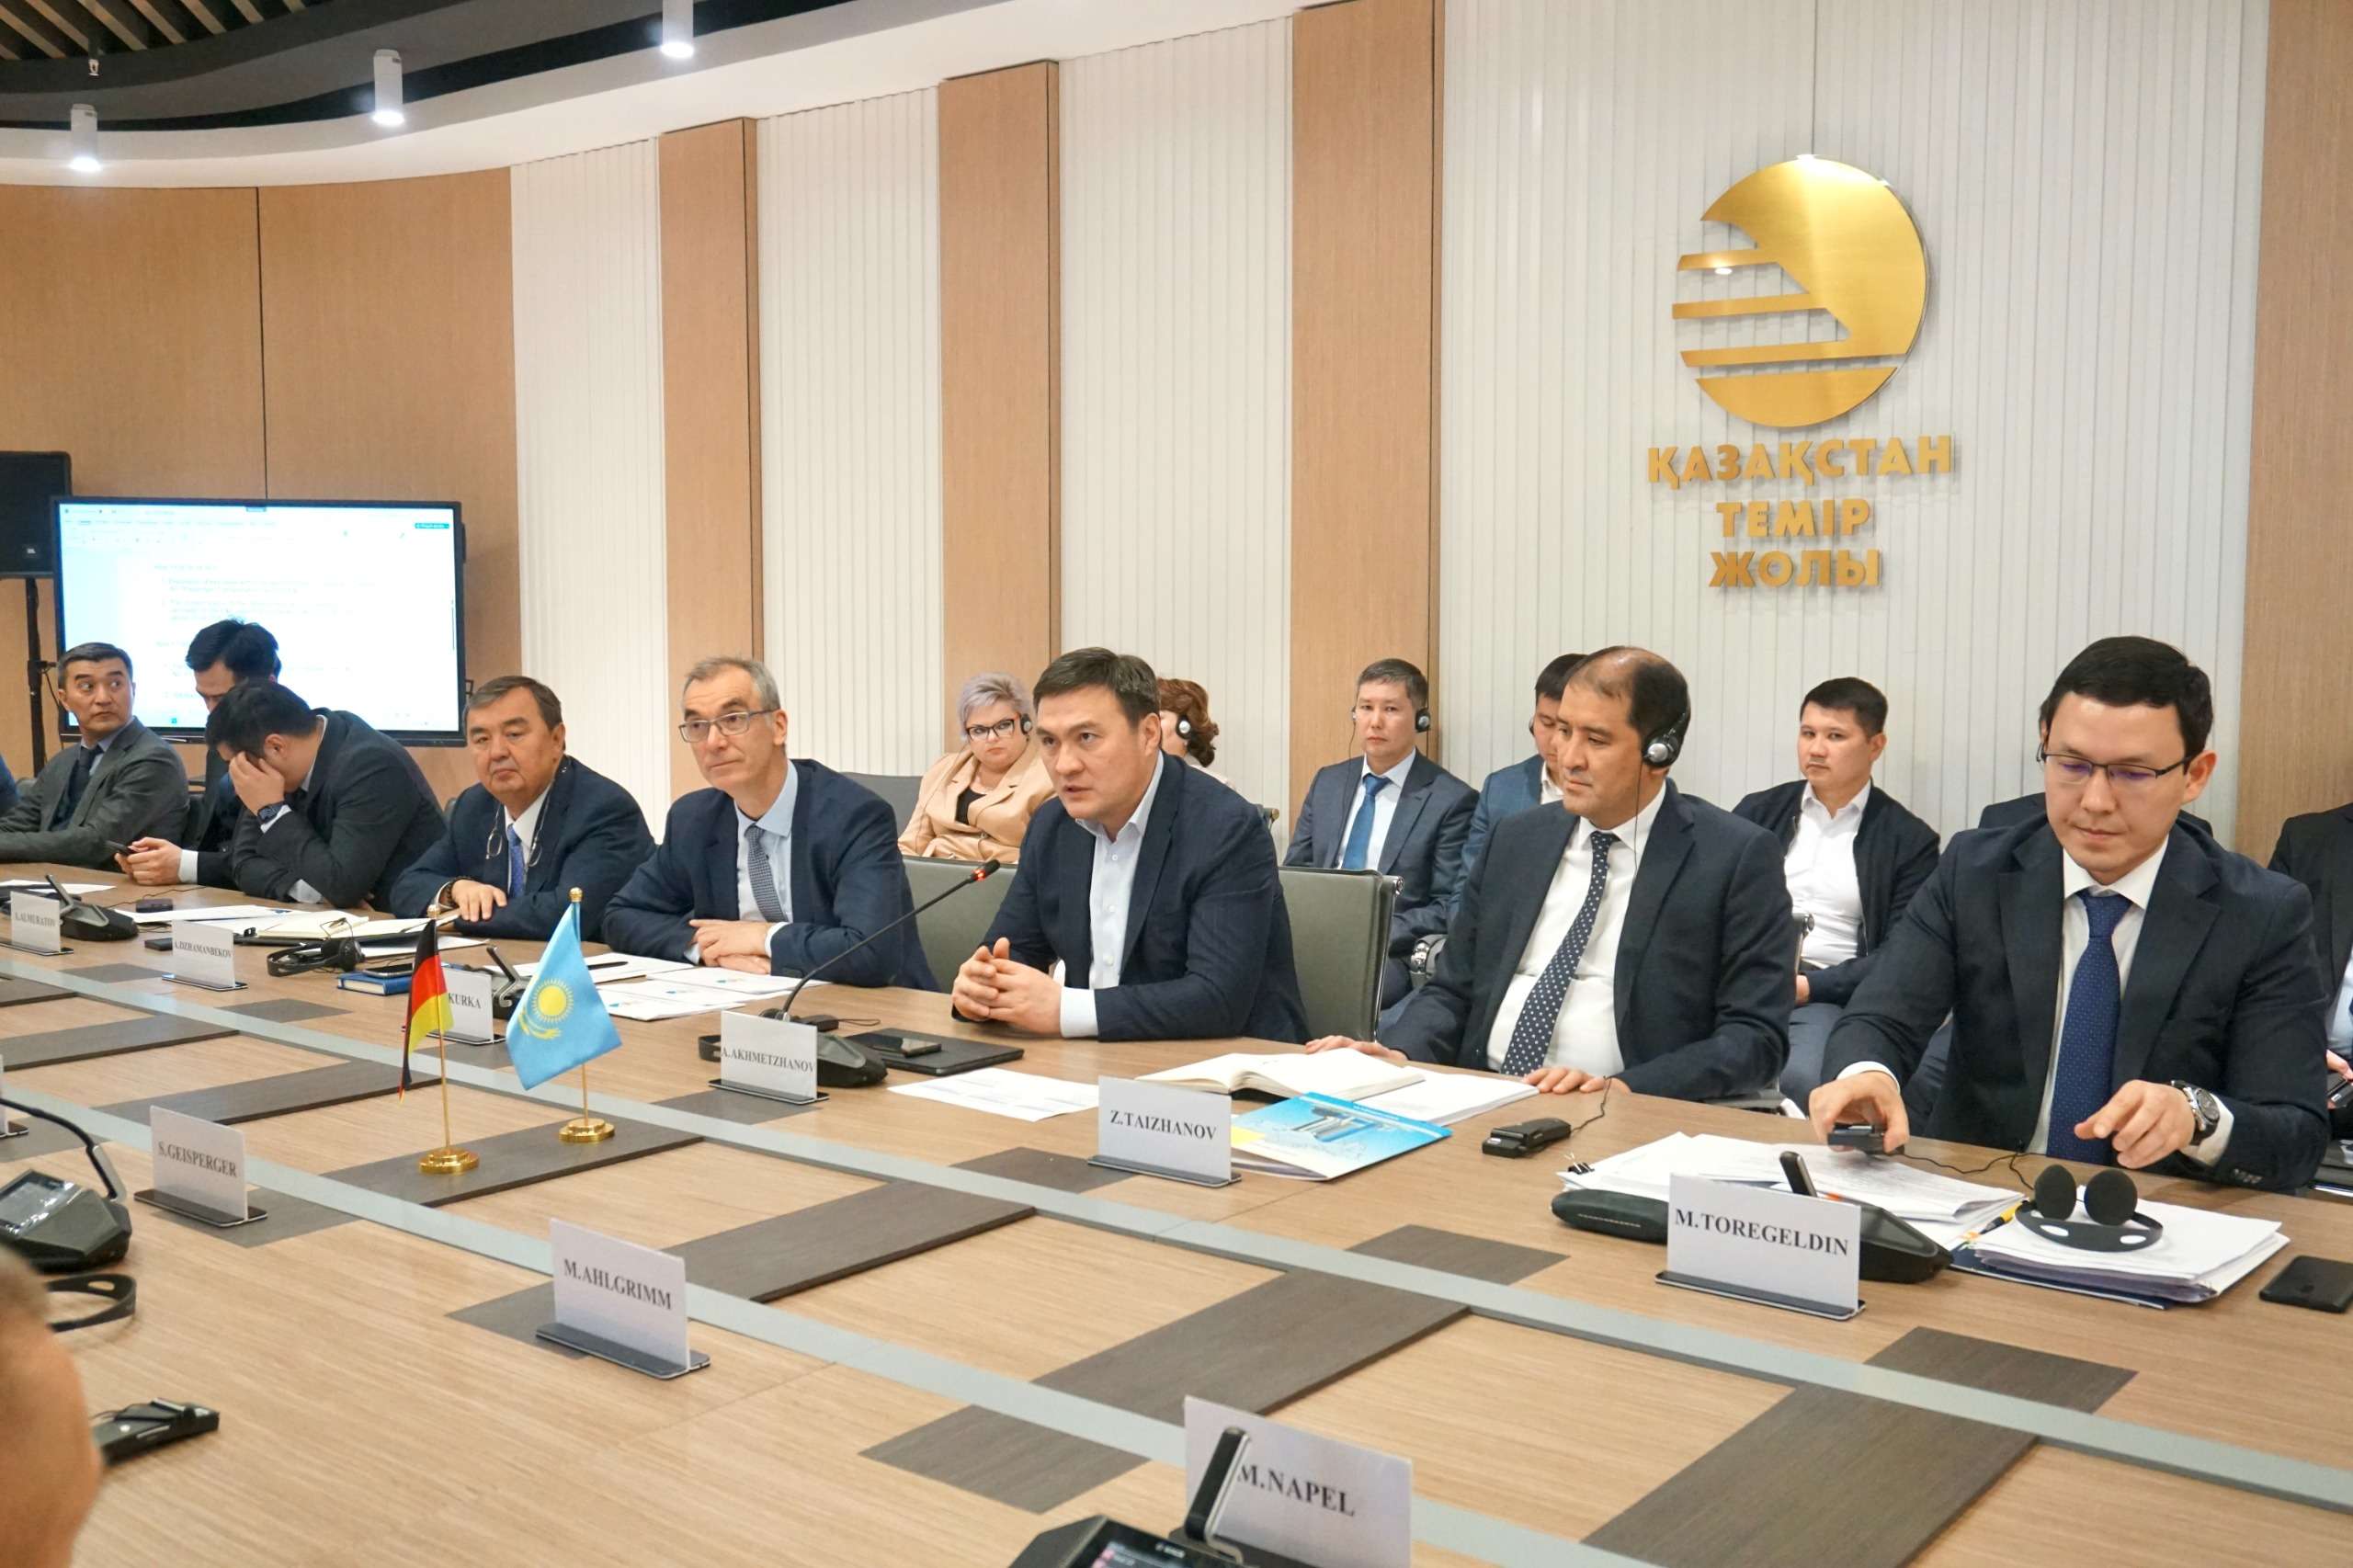 Delegation in Kazakhstan